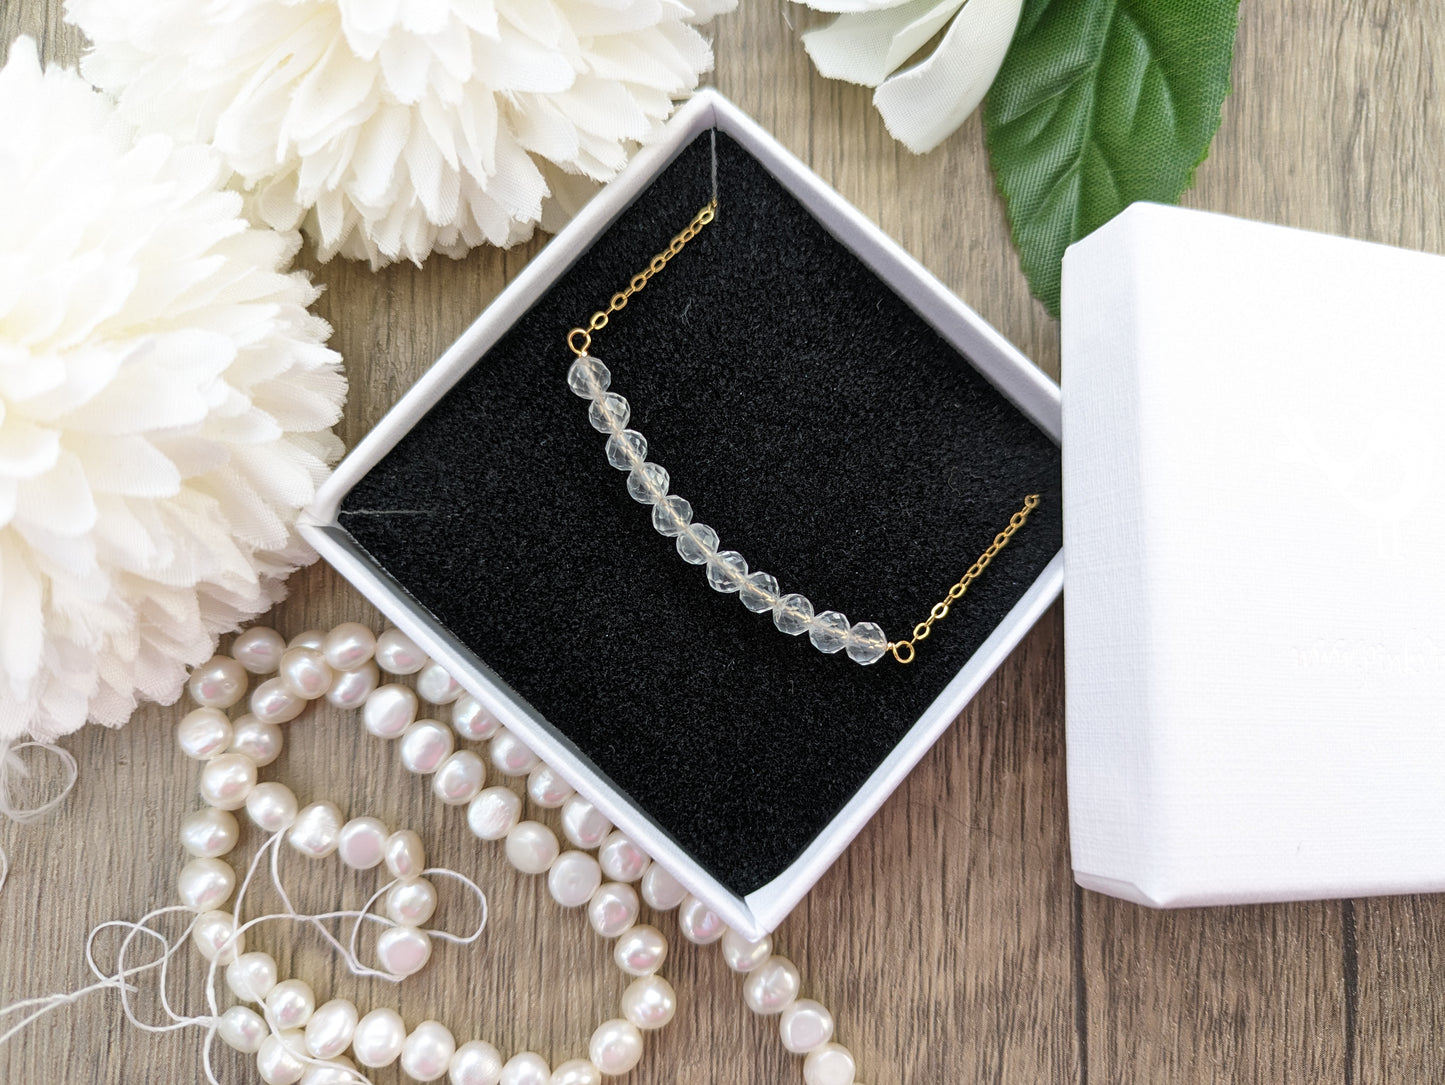 Quartz gemstone necklace in silver or gold.